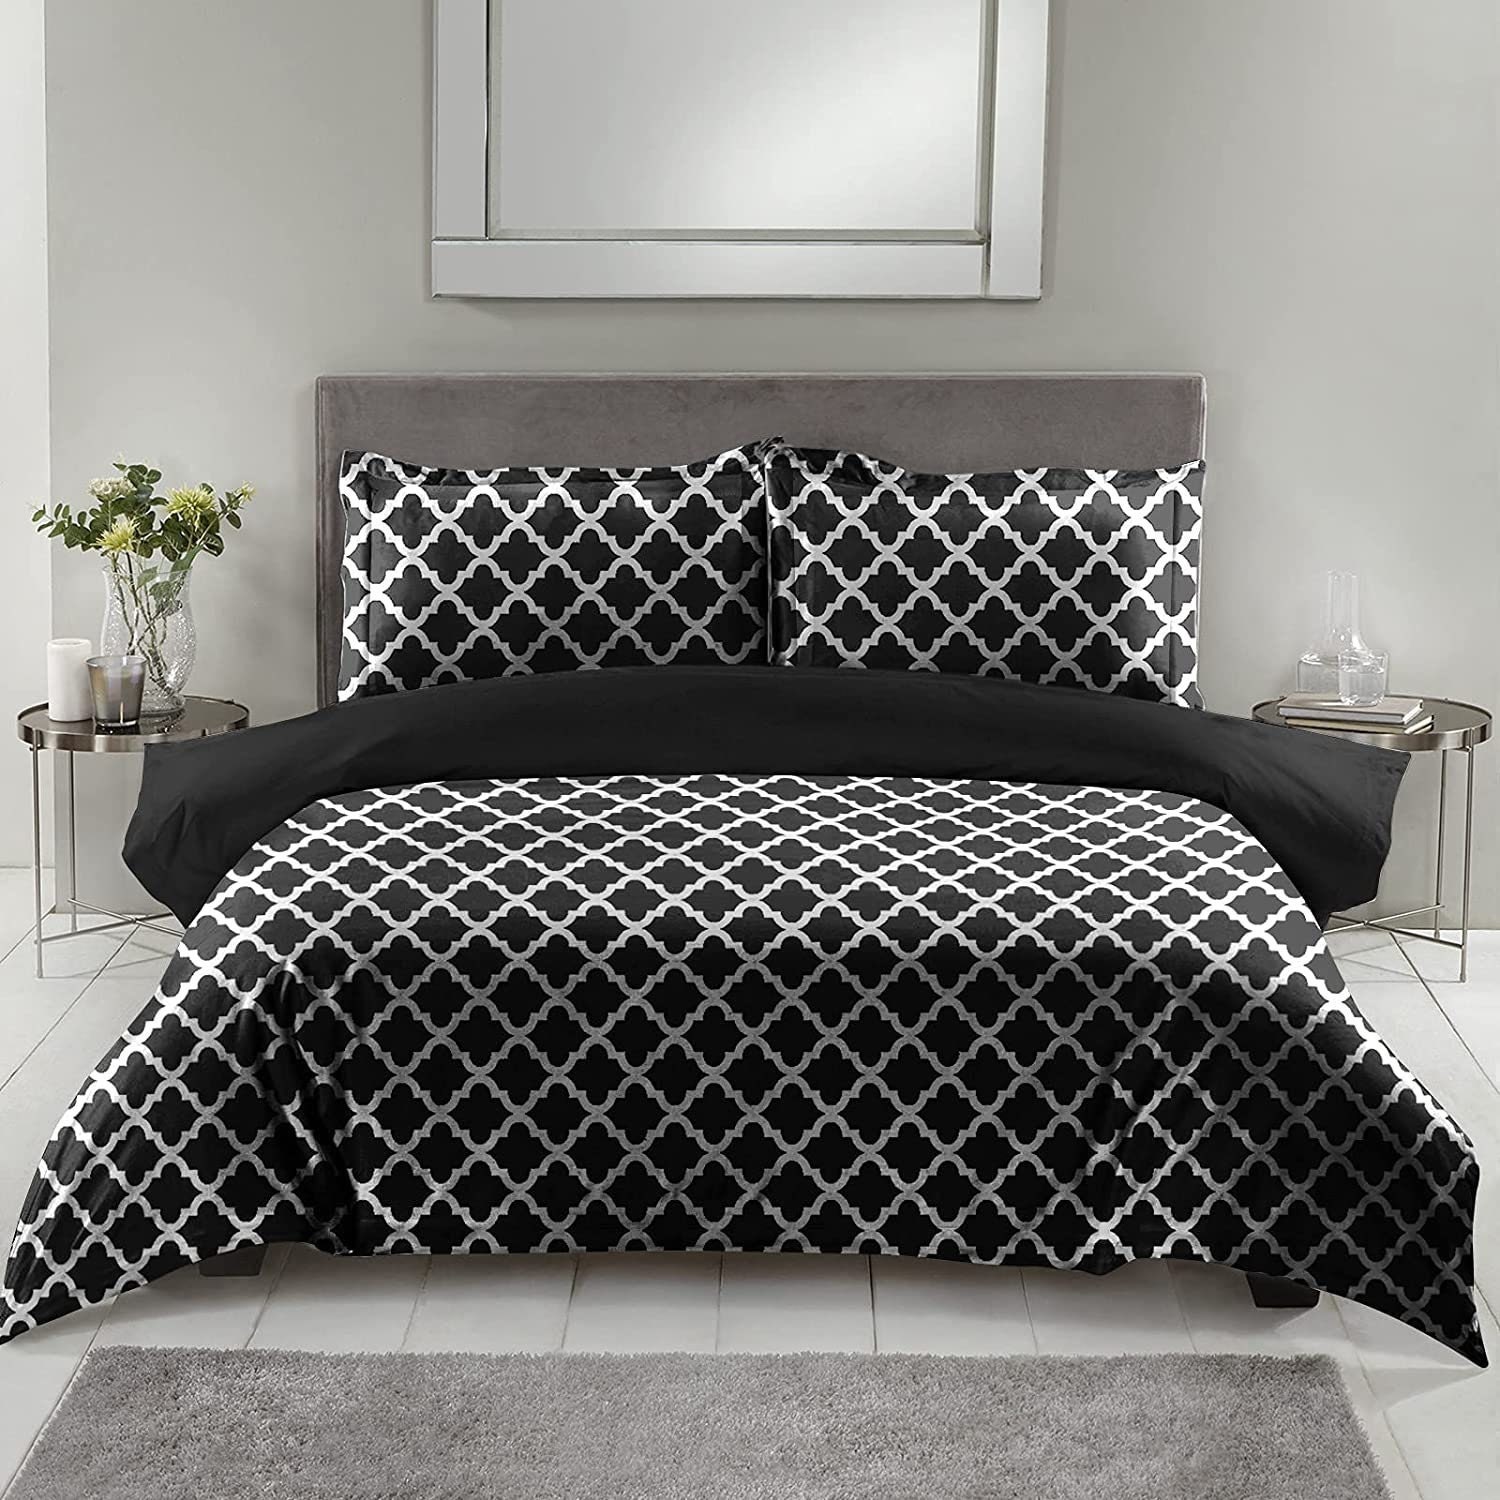 Louis vuitton inspired switchplate  Flex room, Designer bed sheets,   bag